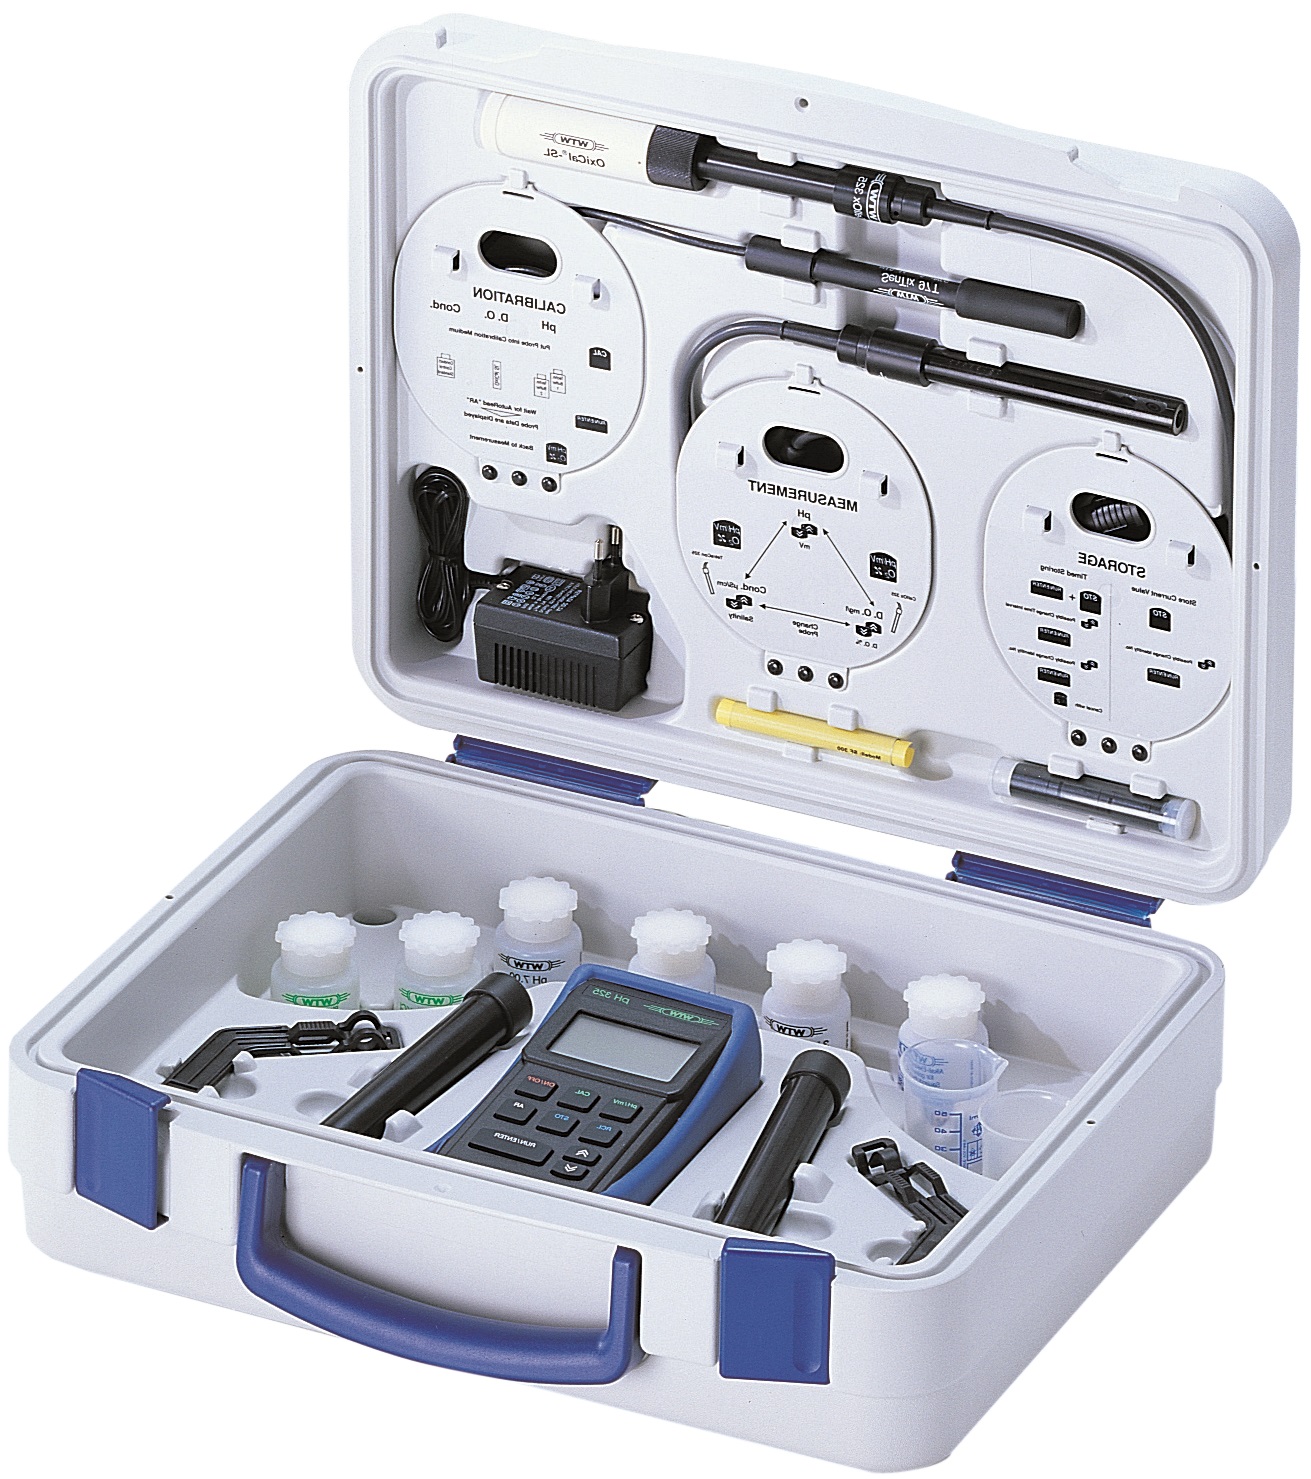 Medical Instrument Cases